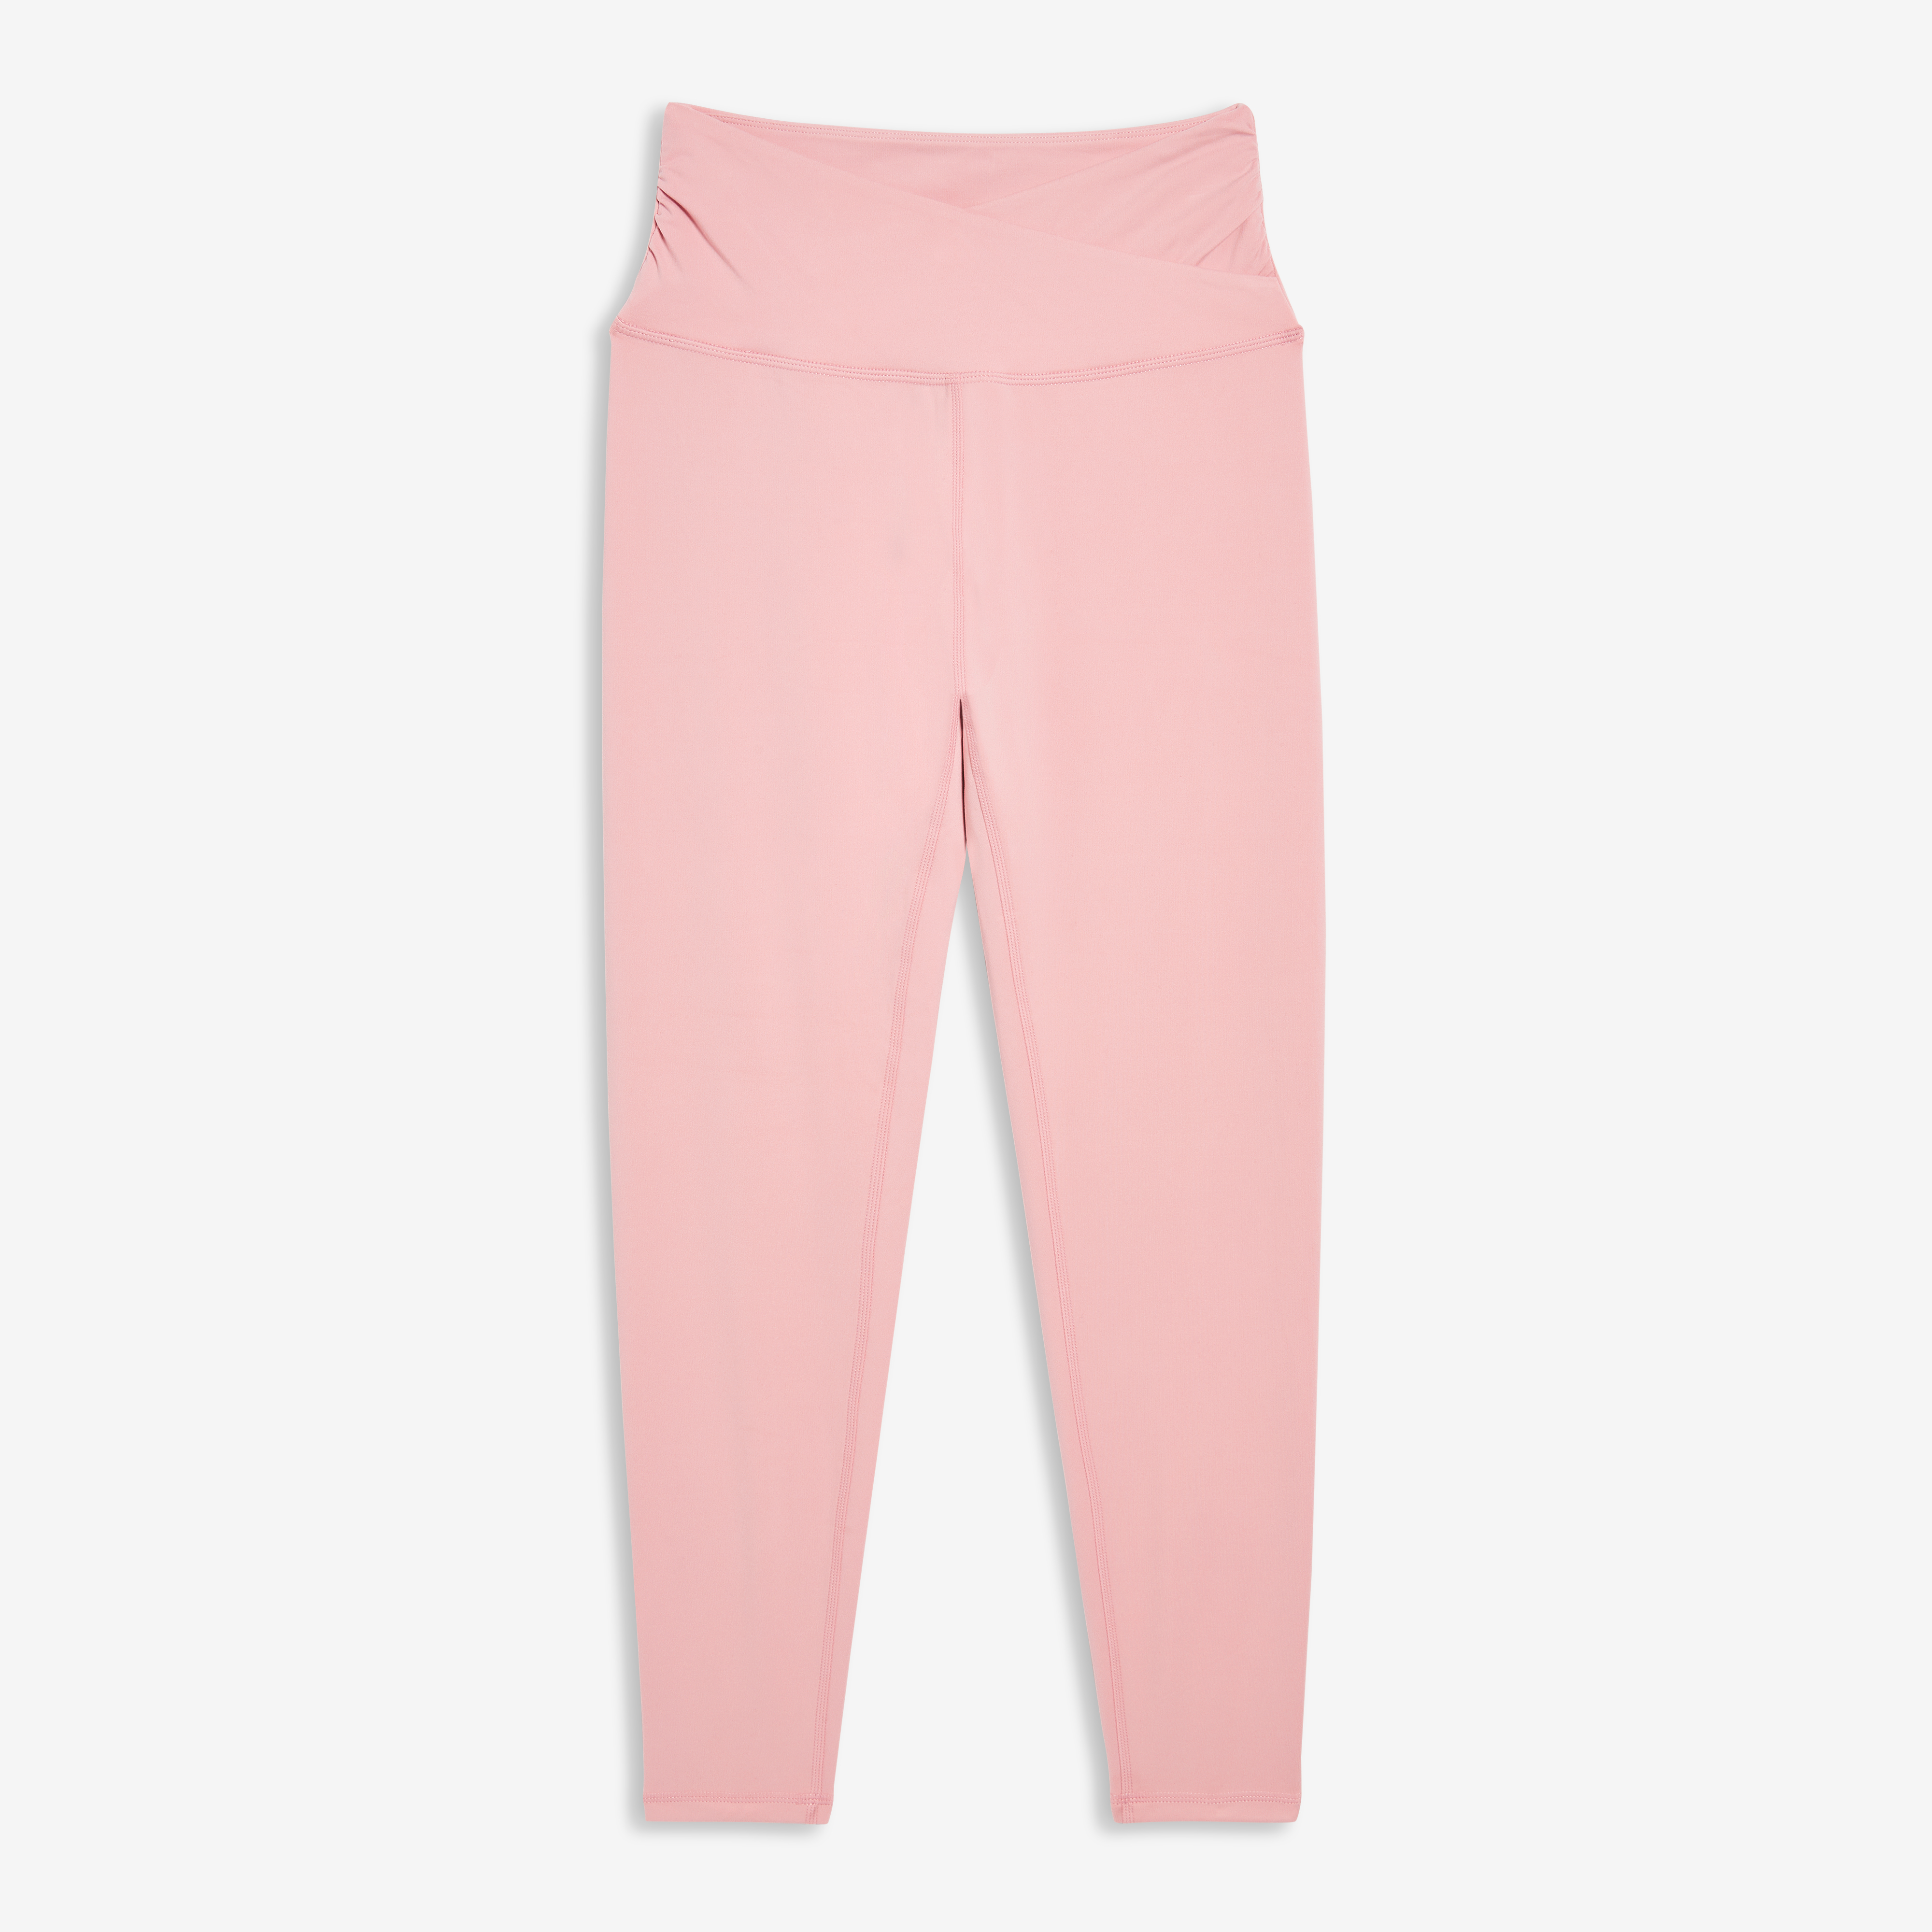 Pink Joe Fresh leggings on white background